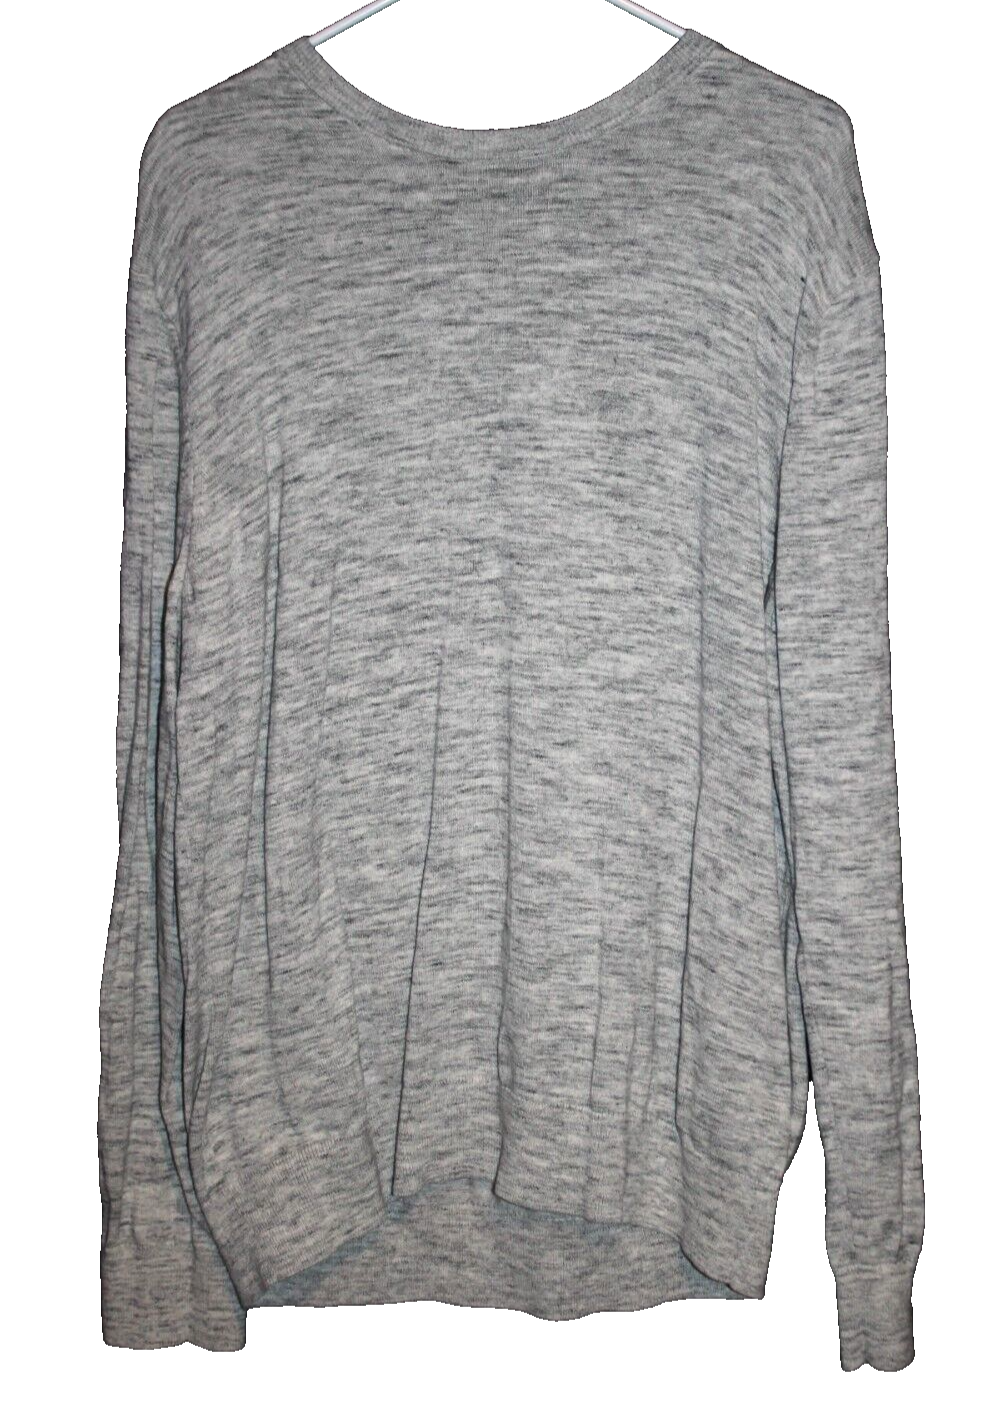 Primary image for Banana Republic Men's Crewneck Sweater Large Heathered Light Gray Long Sleeve